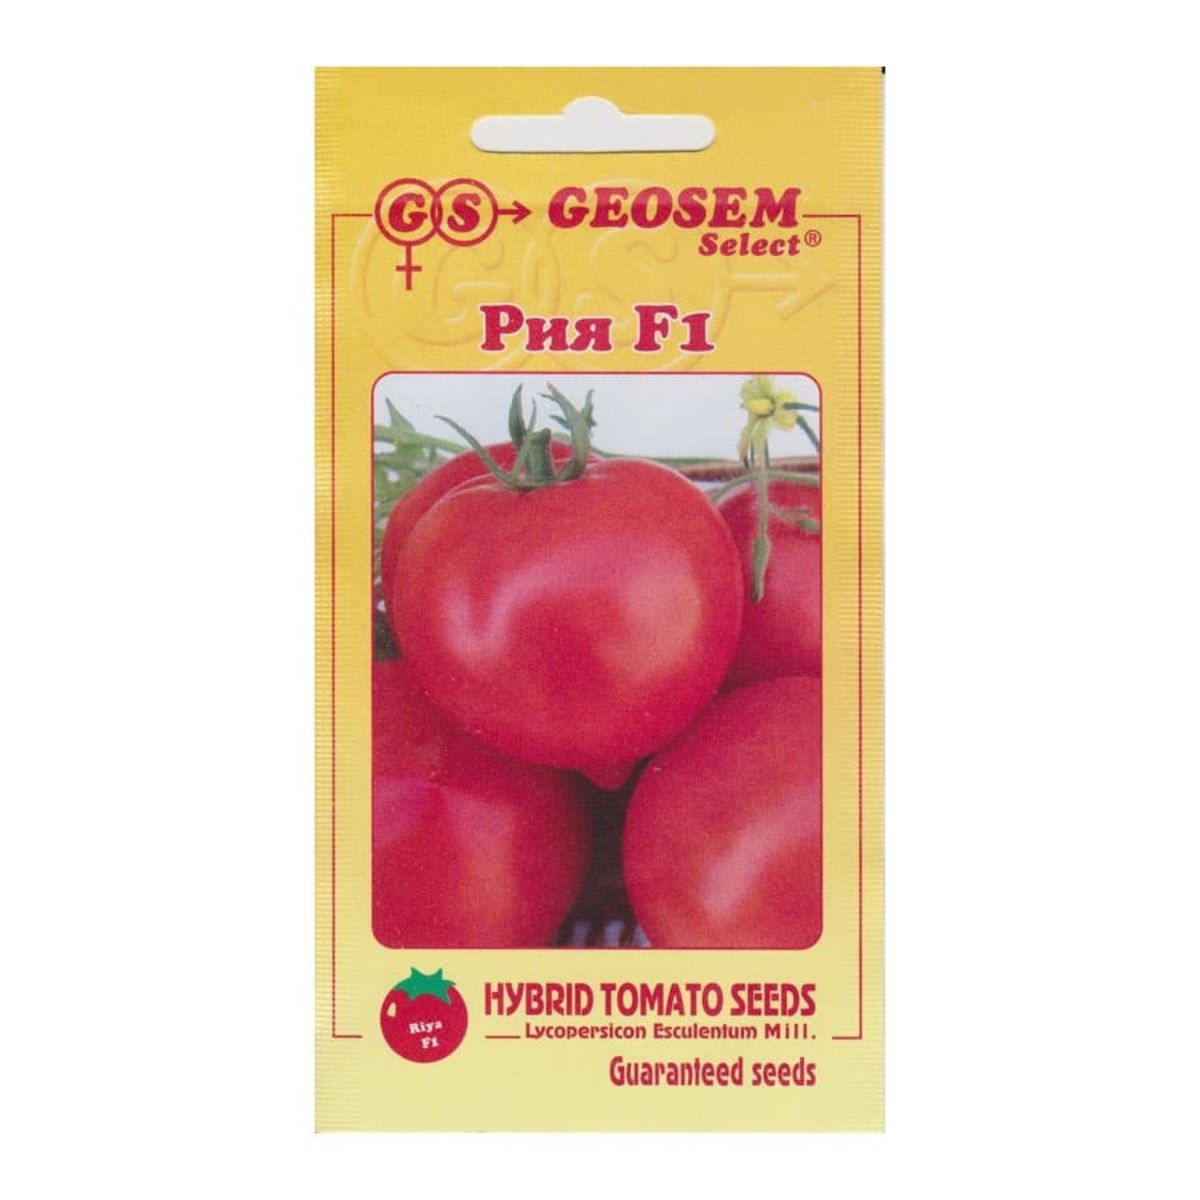 Tomate - Seminte Tomate semi-timpurii RIYA GeosemSelect 50 sem, hectarul.ro